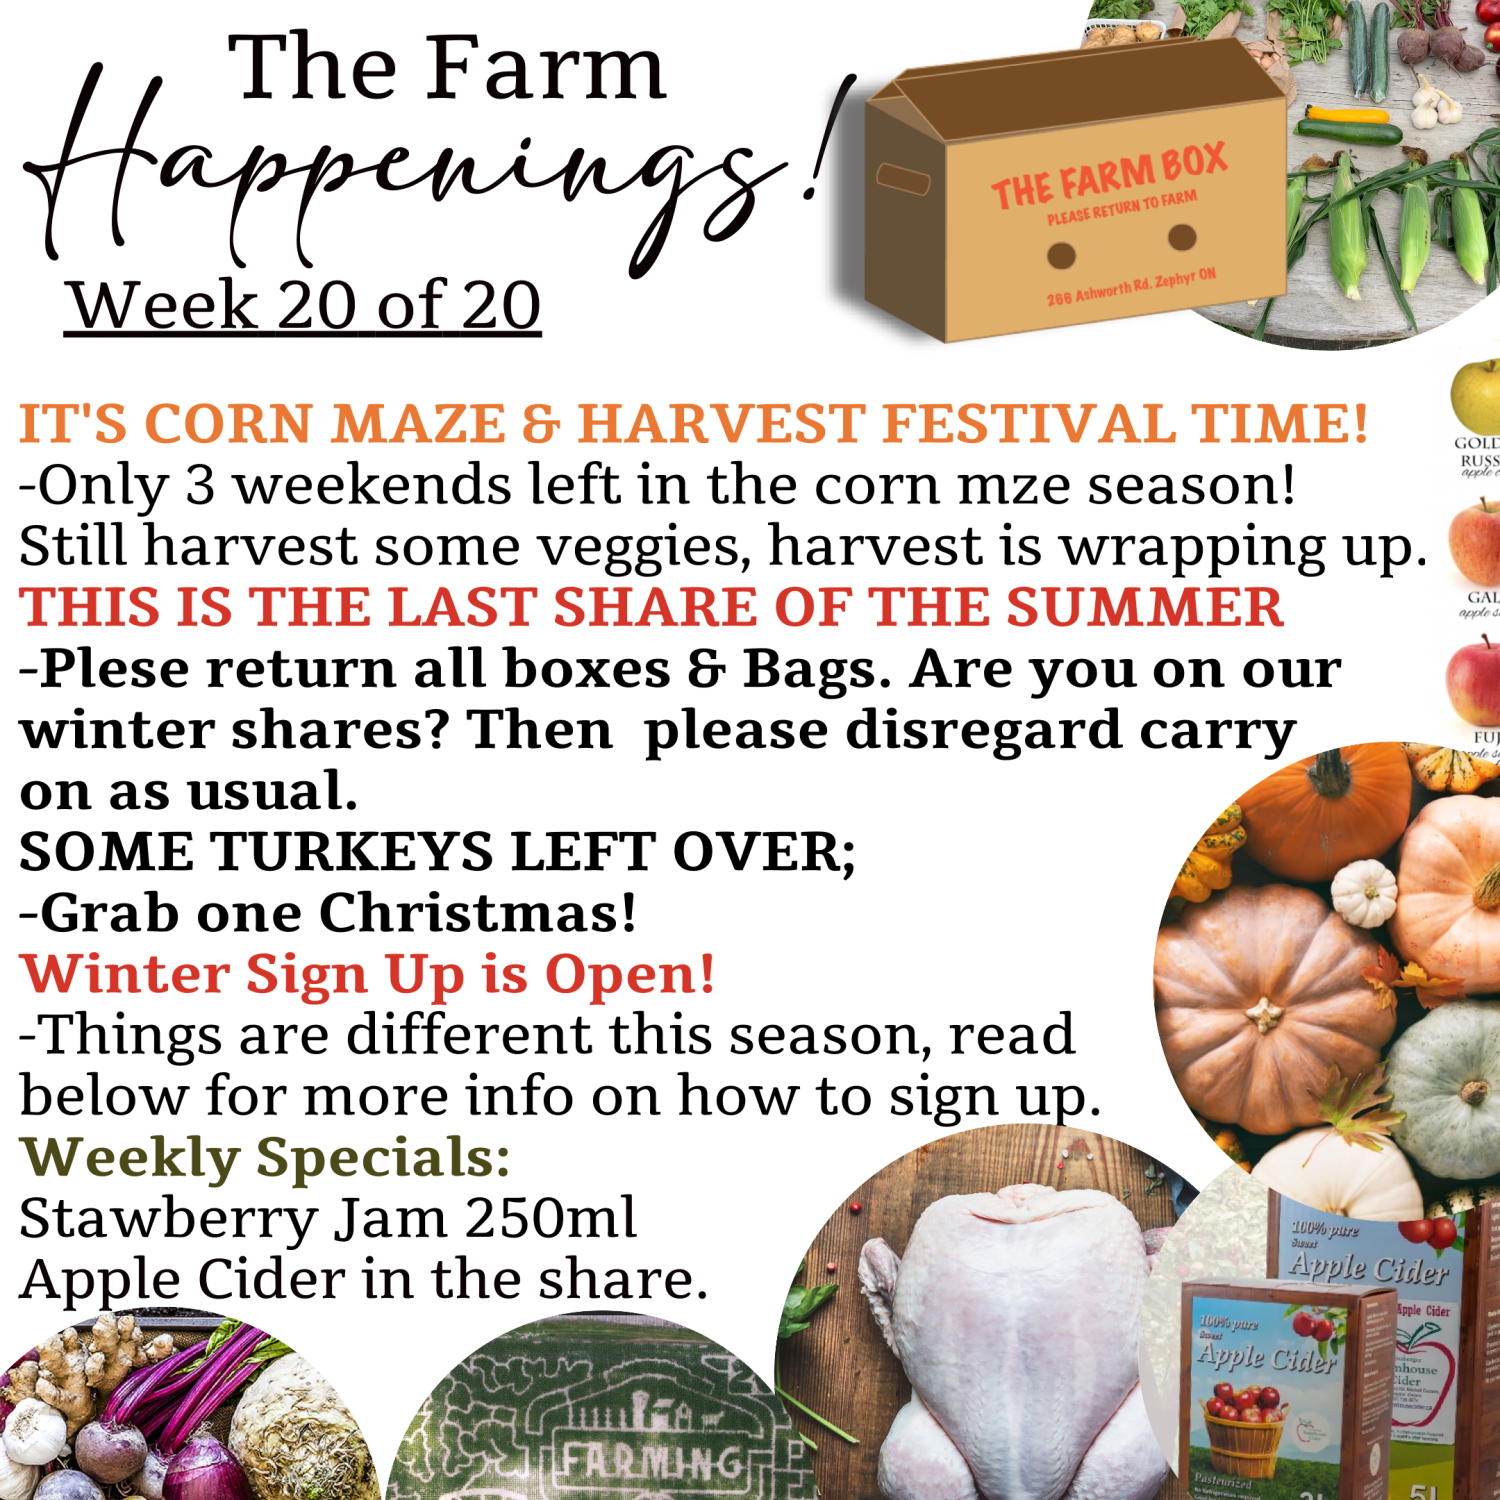 Next Happening: "The Farm Box"-Coopers CSA Farm Farm Happenings Week 20